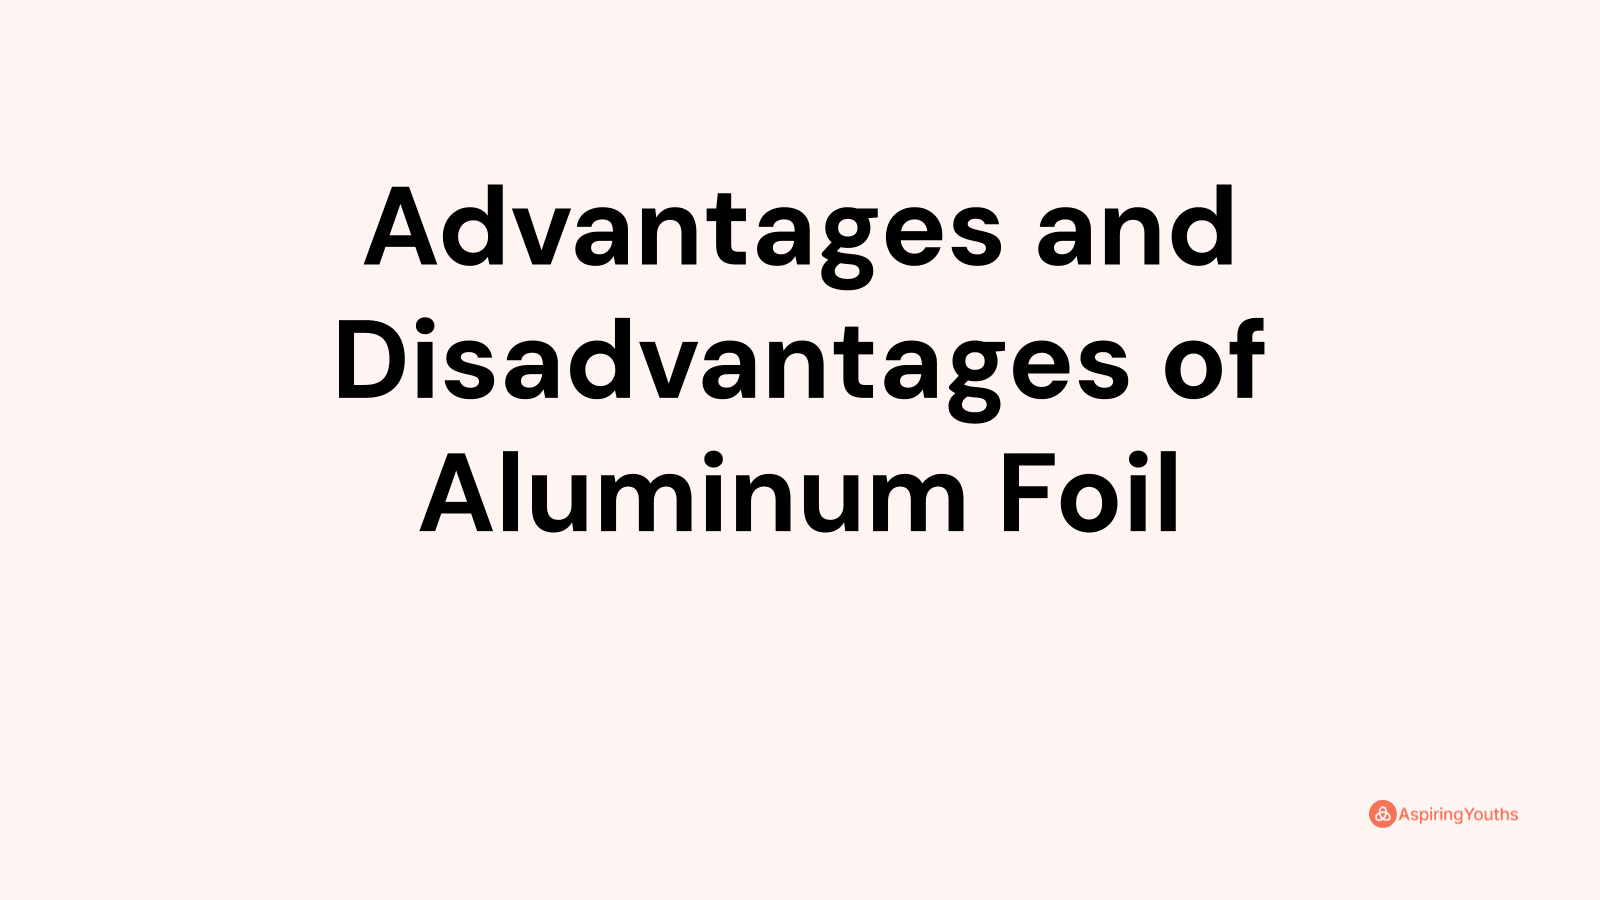 Advantages and disadvantages of Aluminum Foil